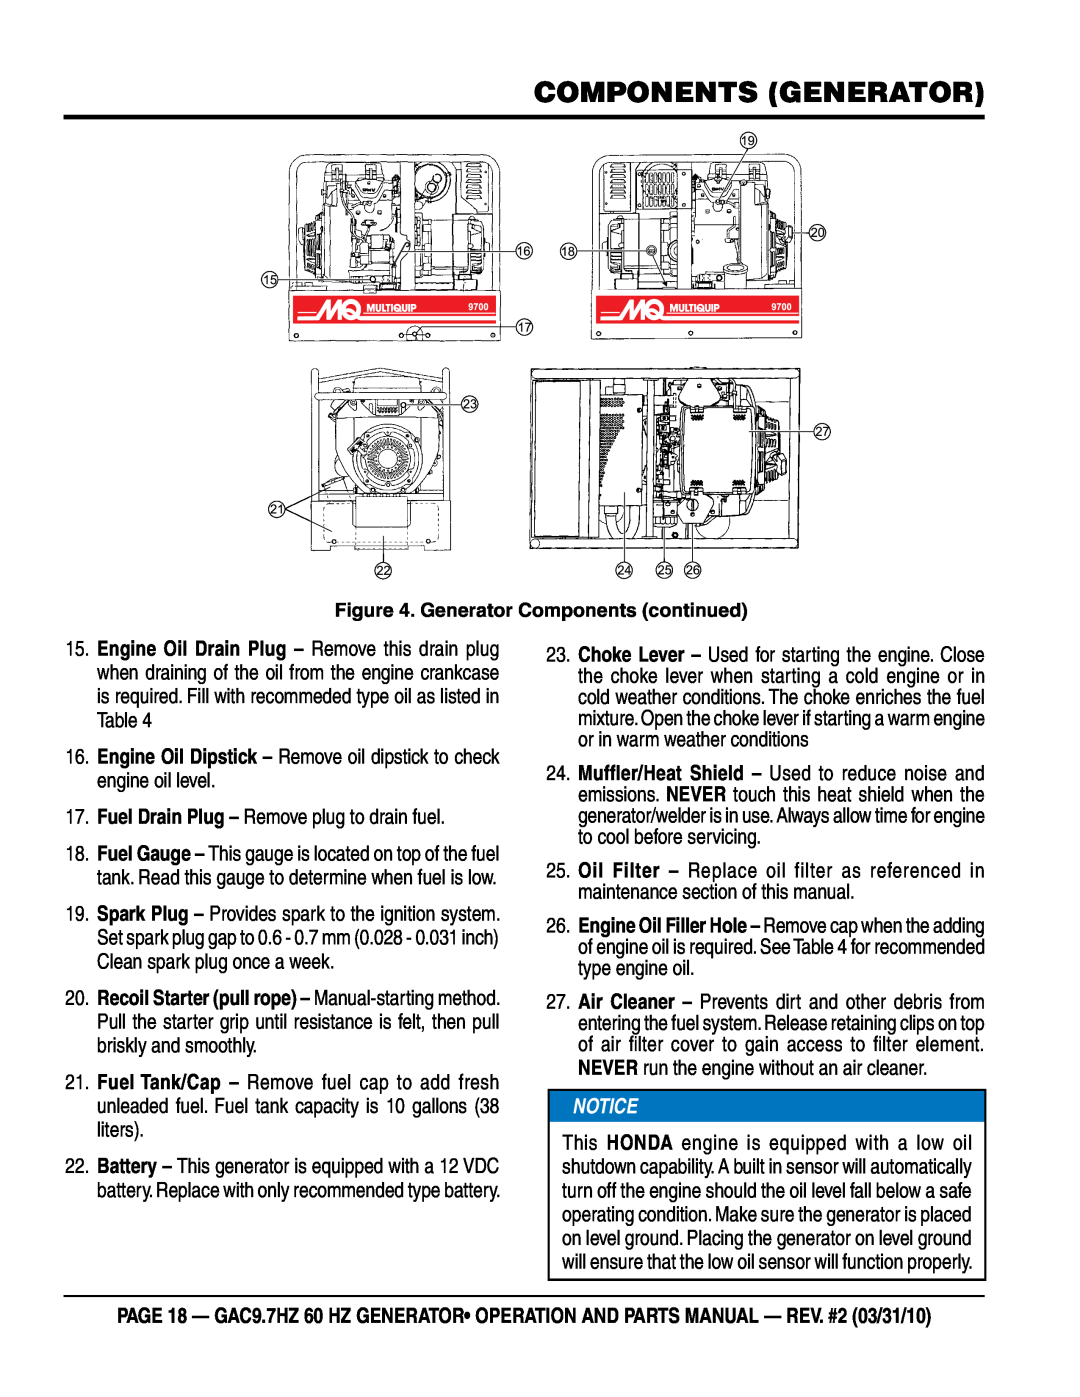 Multiquip GAC-9.7HZ manual components generator, Fuel Drain Plug - Remove plug to drain fuel 